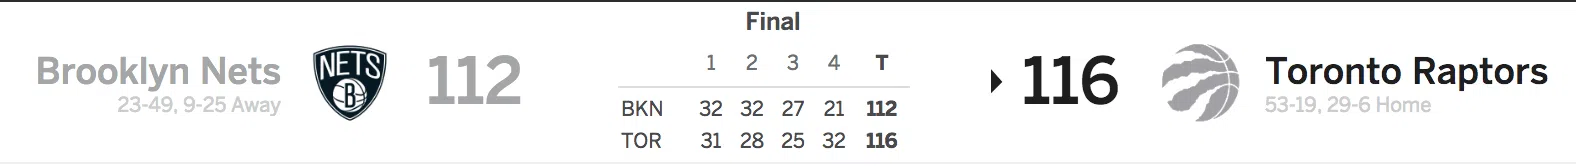 Brooklyn Nets at Toronto Raptors 3-23-18 Score